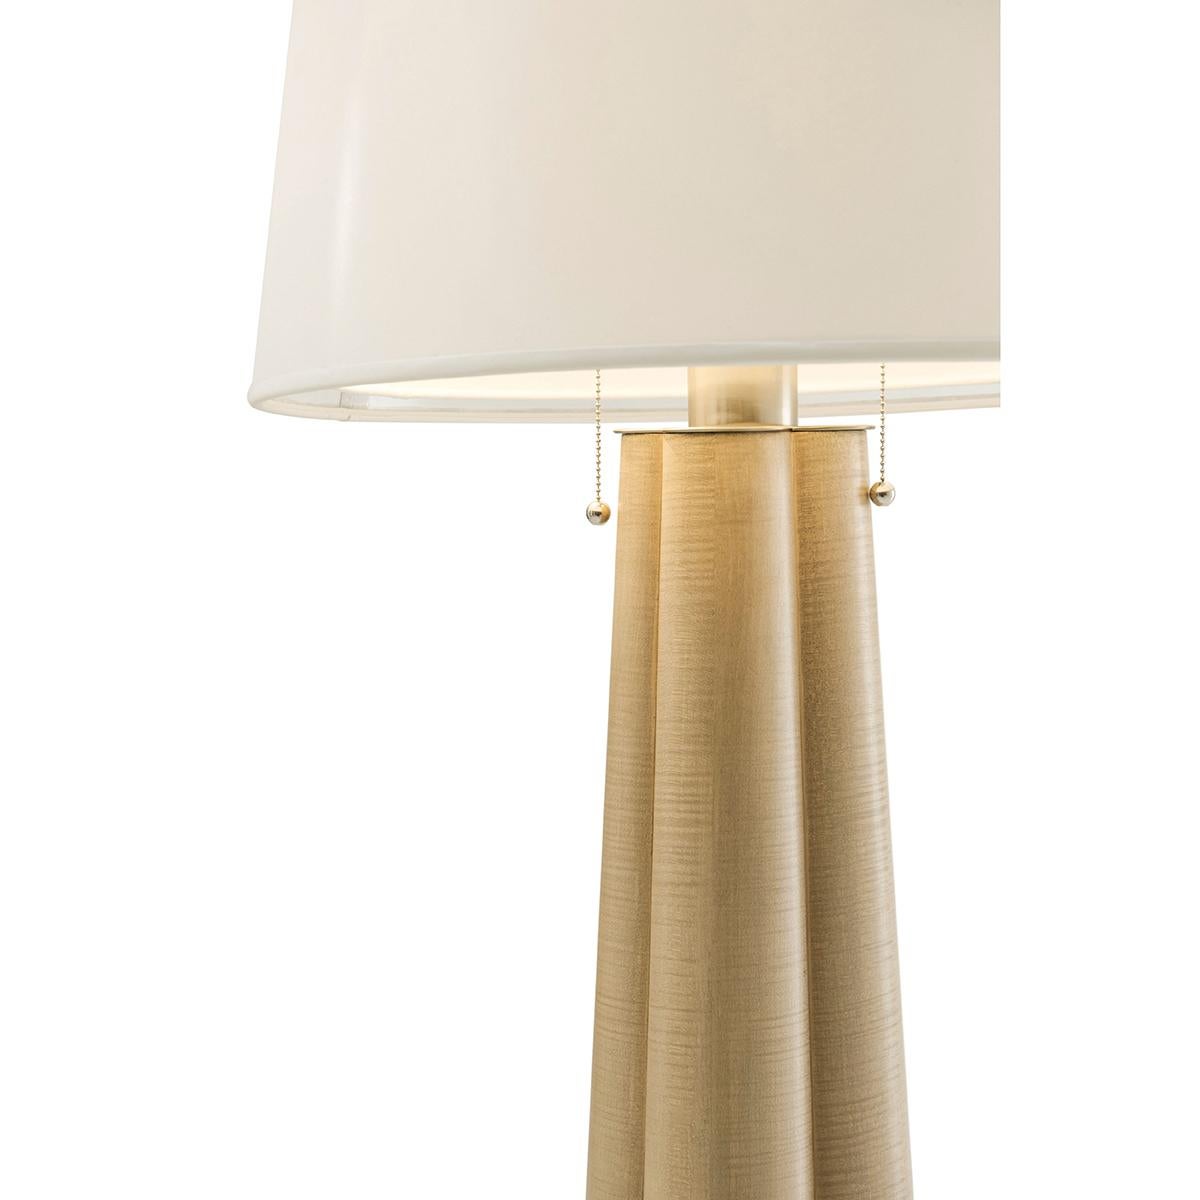 Vietnamese Art Deco Style Floor Lamp For Sale